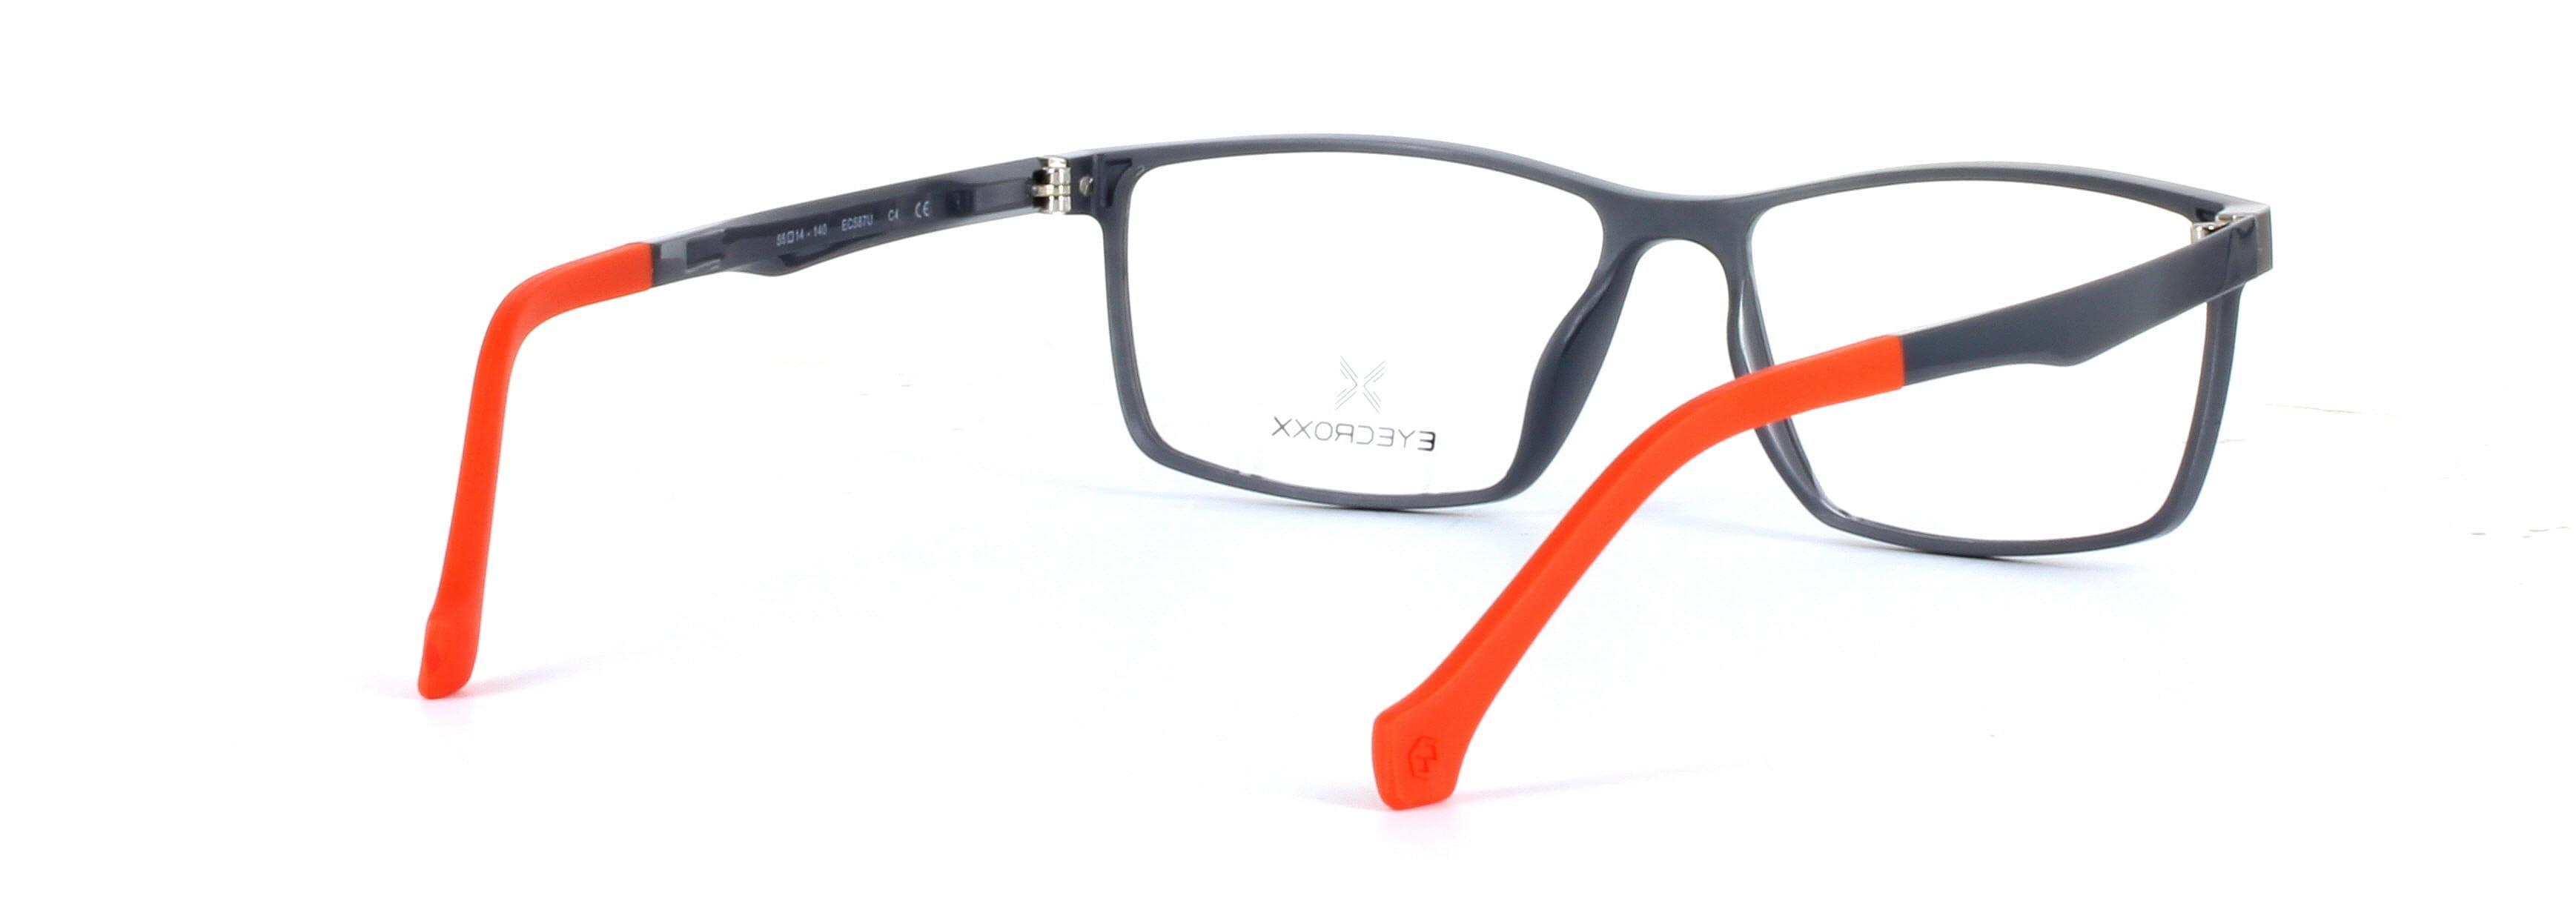 Eyecroxx 587-C4 Grey and Orange Full Rim Rectangular Plastic Glasses - Image View 4